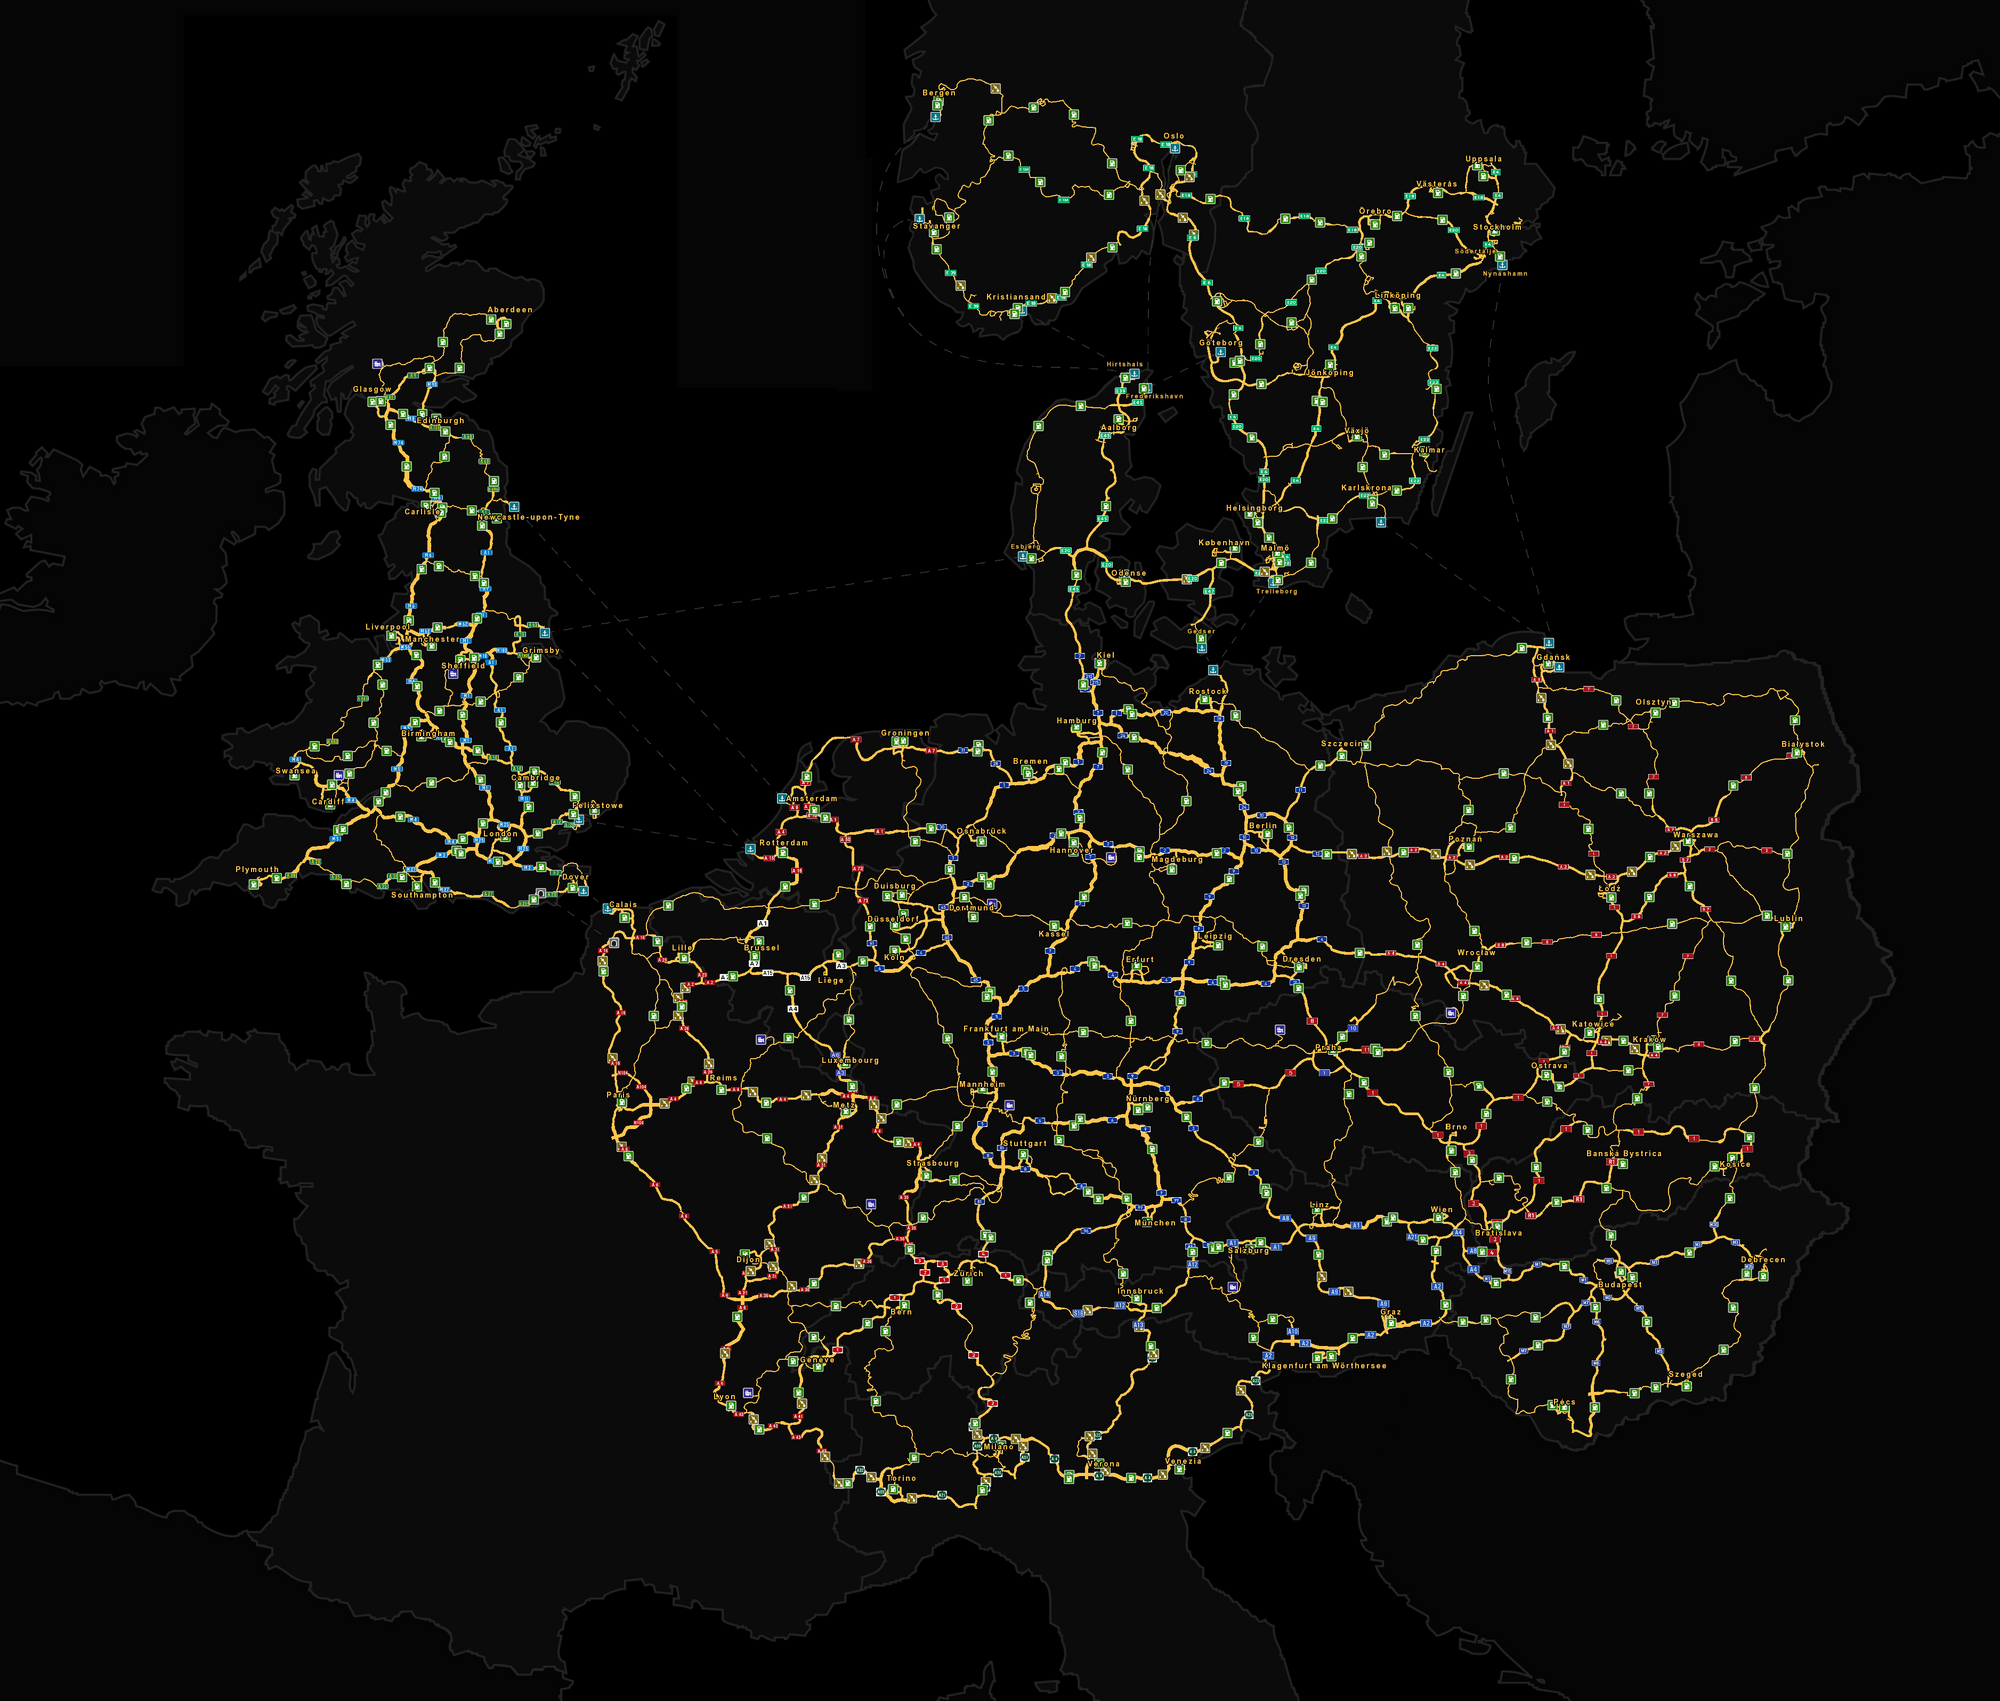 Euro Truck Simulator 2 Full Map Image - Euro Truck Simulator 2 full road map.png | Truck Simulator Wiki | Fandom powered by Wikia